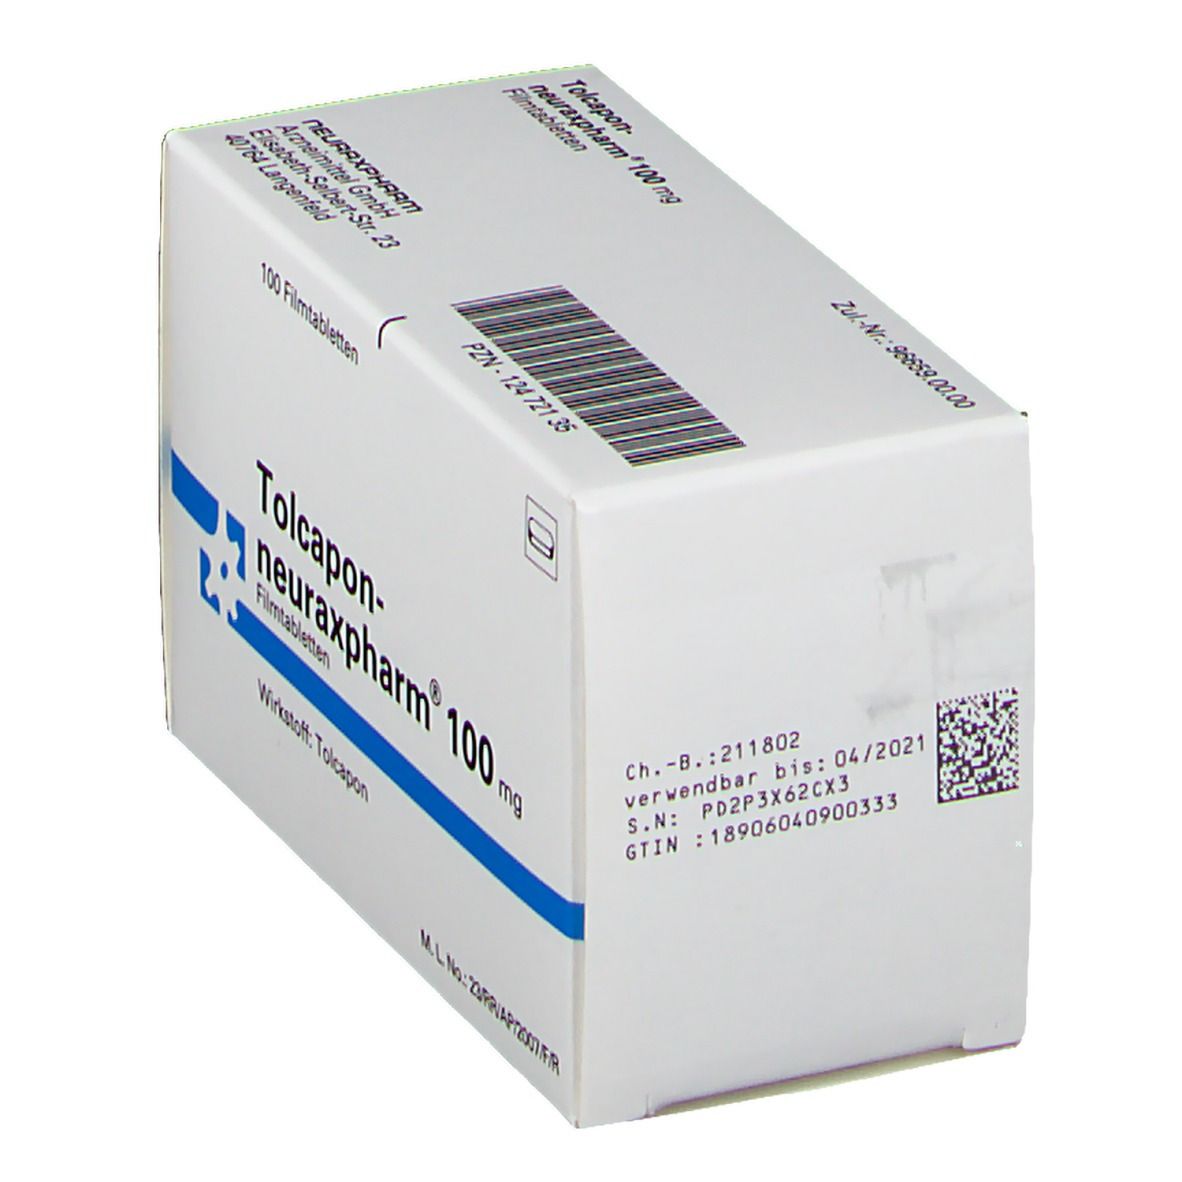 Tolcapon-neuraxpharm® 100 mg